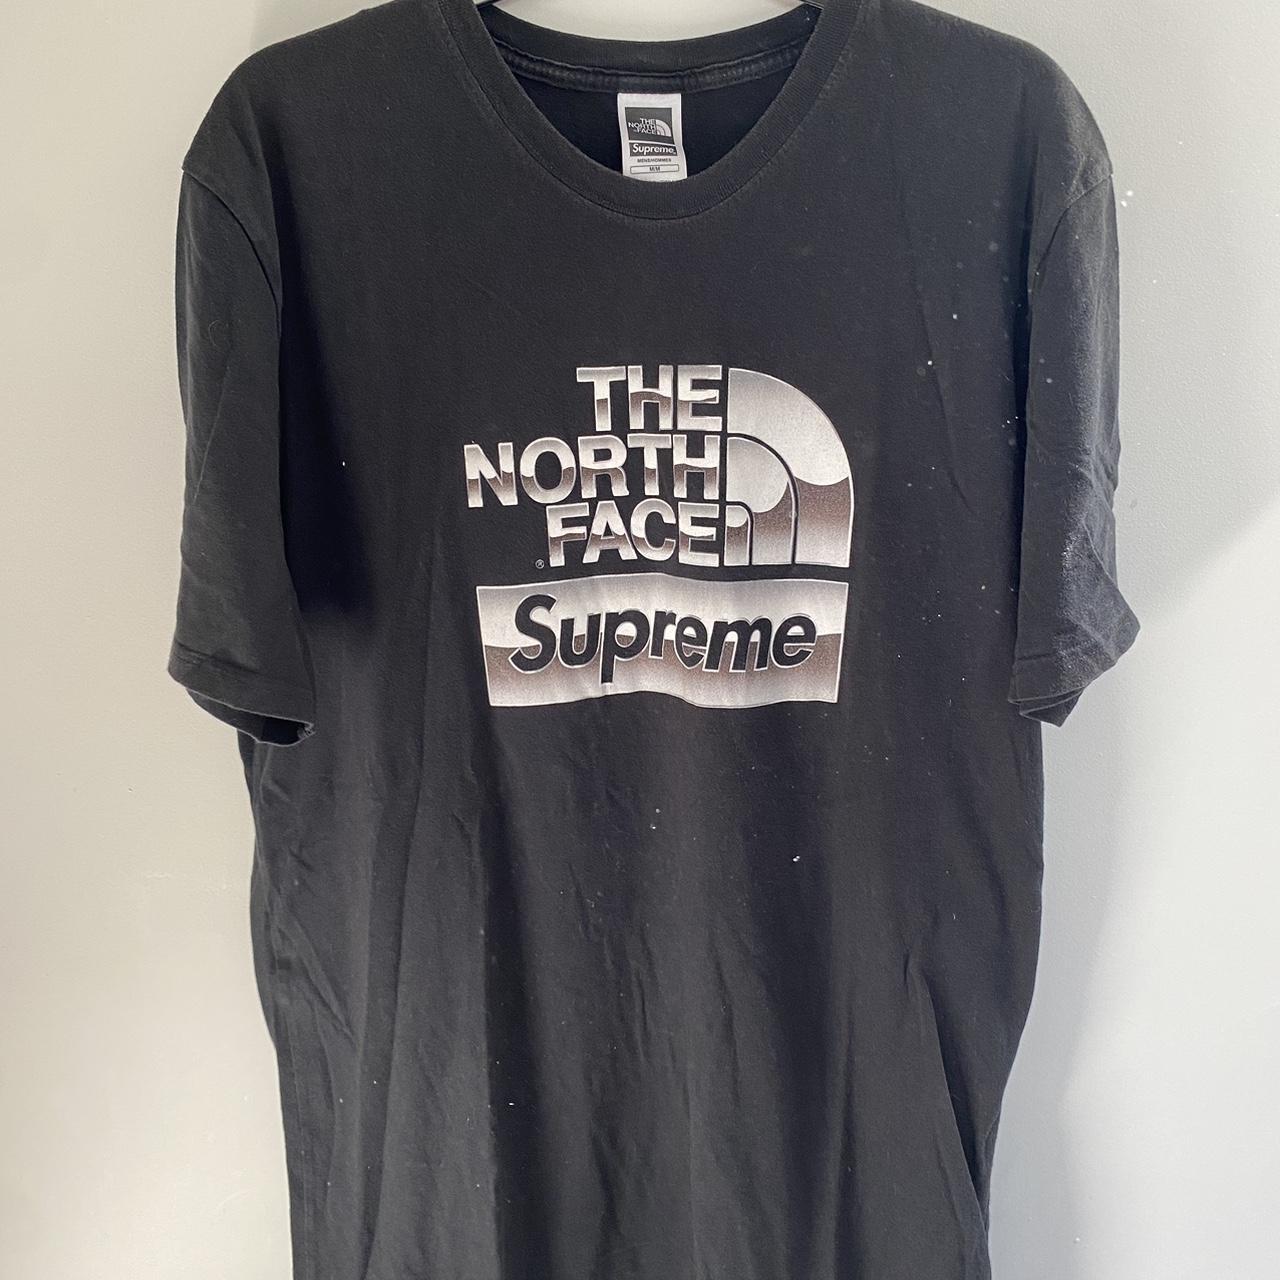 The North Face x Supreme Metallic logo tee shirt.... - Depop